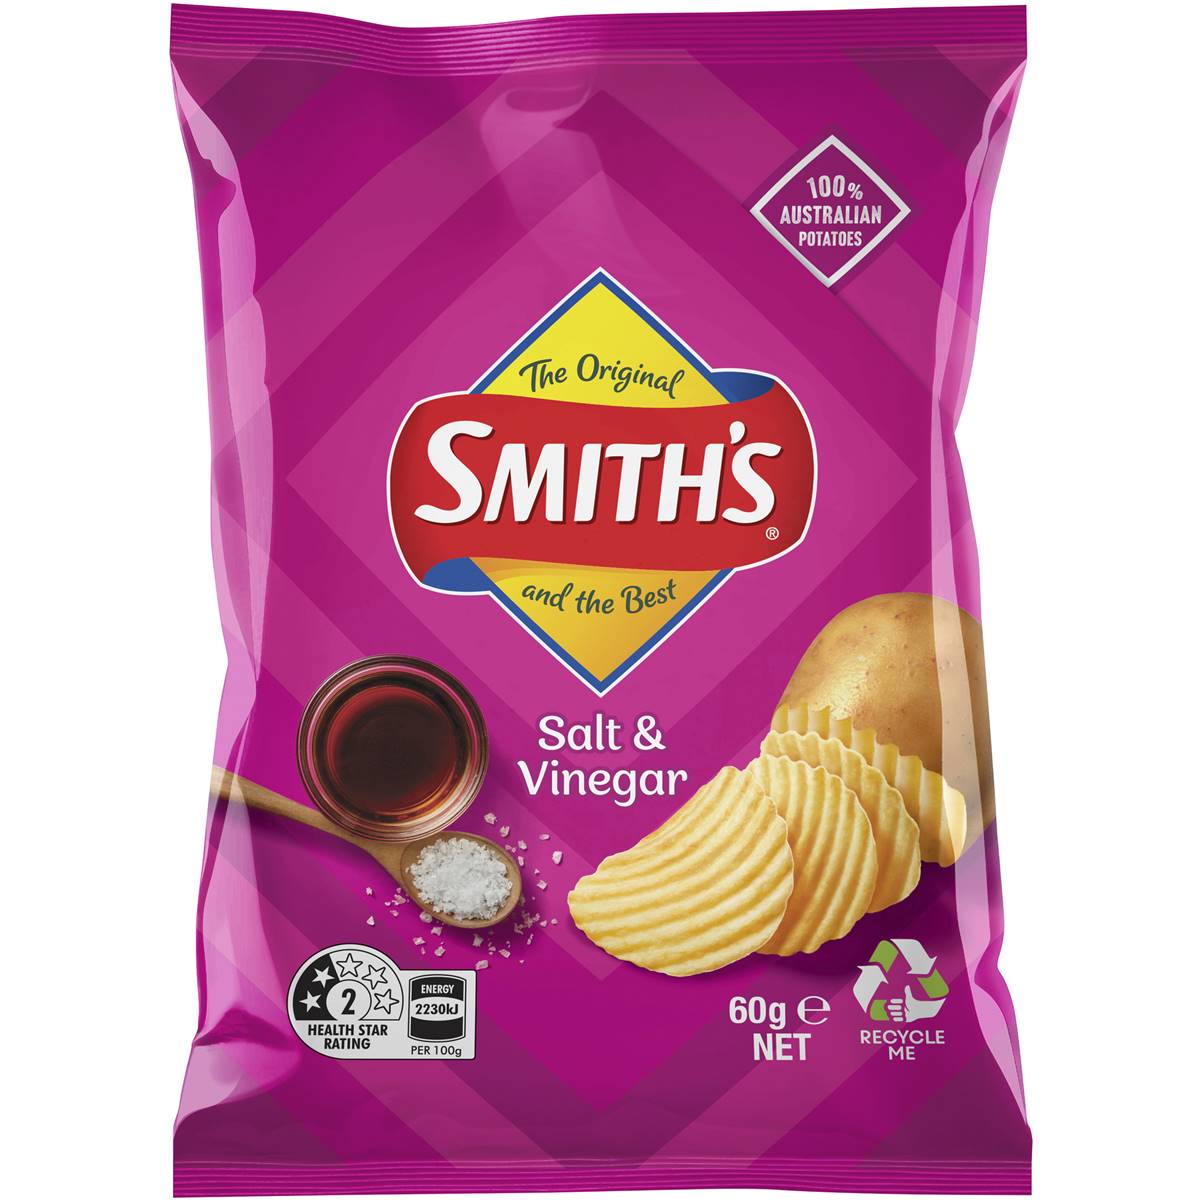 Calories in Smith's Crinkle Cut Chips Salt & Vinegar